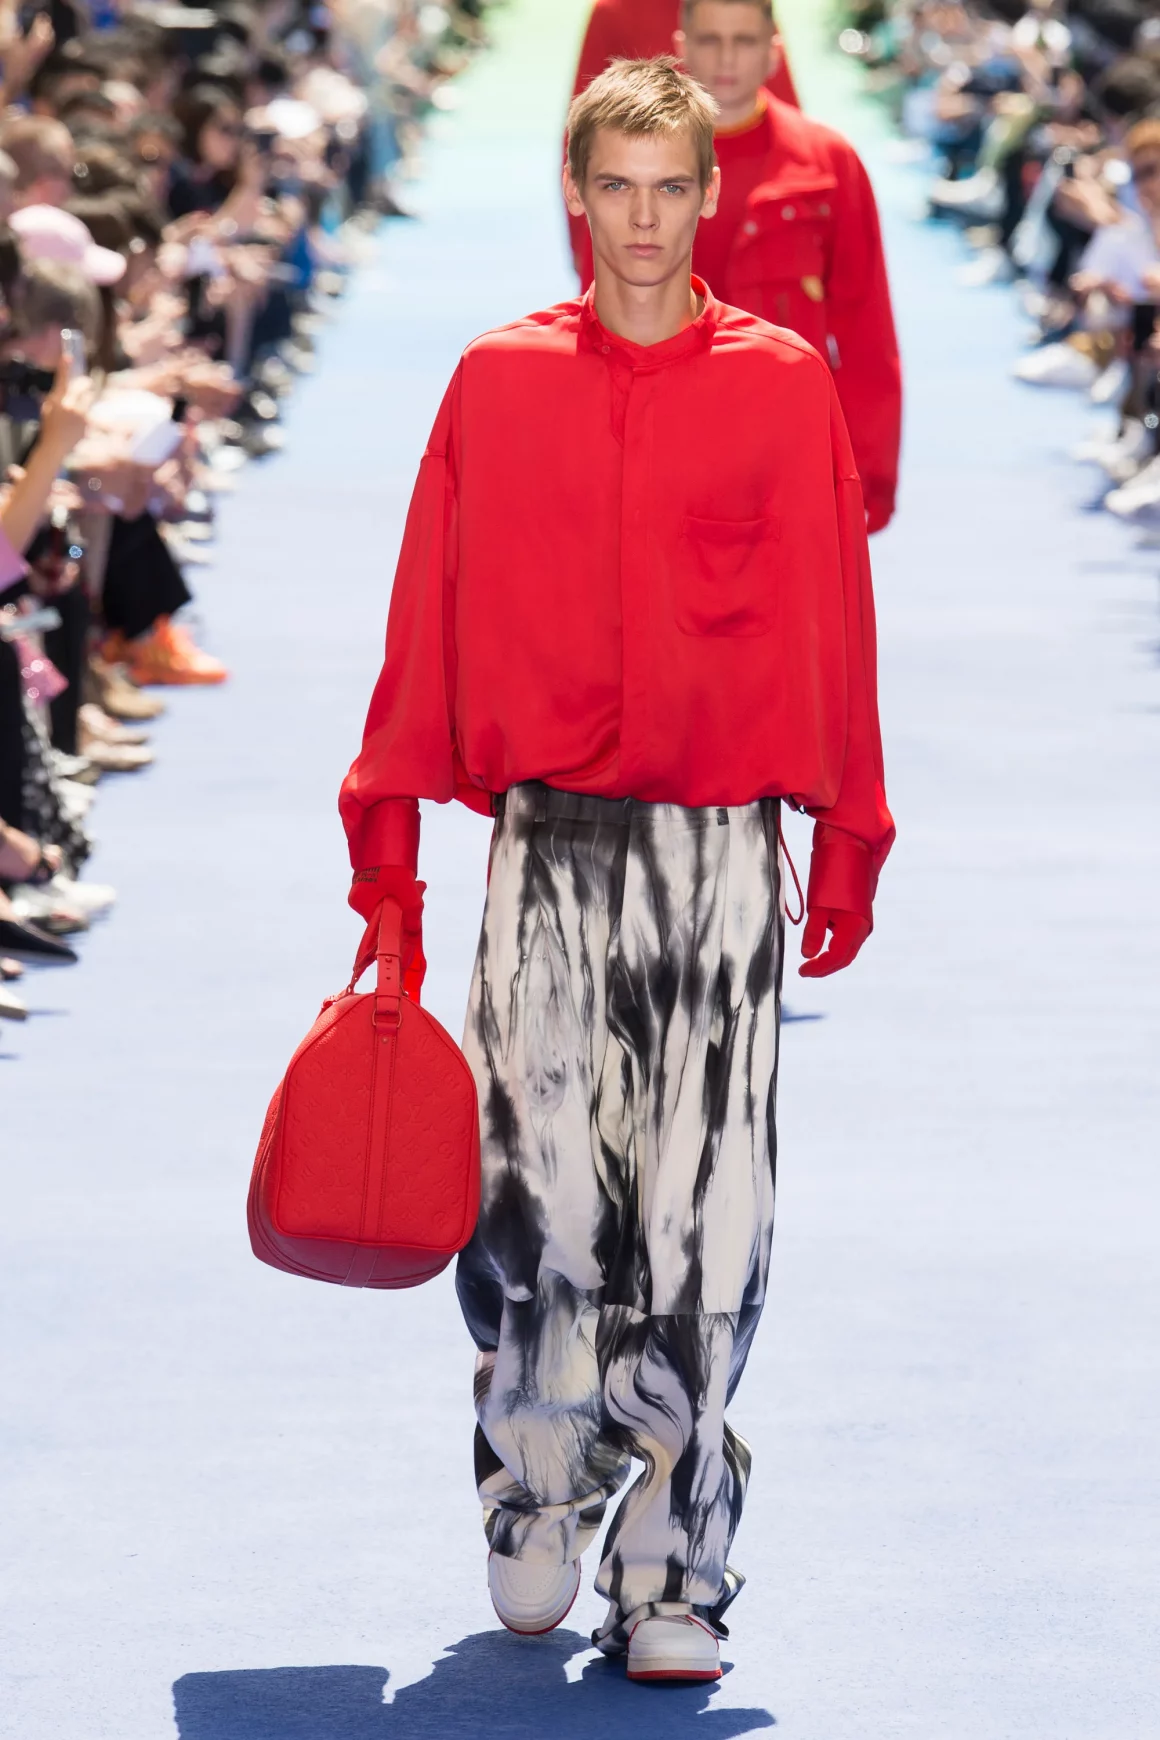 Front Row @ Louis Vuitton Spring 2019 Mens - Red Carpet Fashion Awards